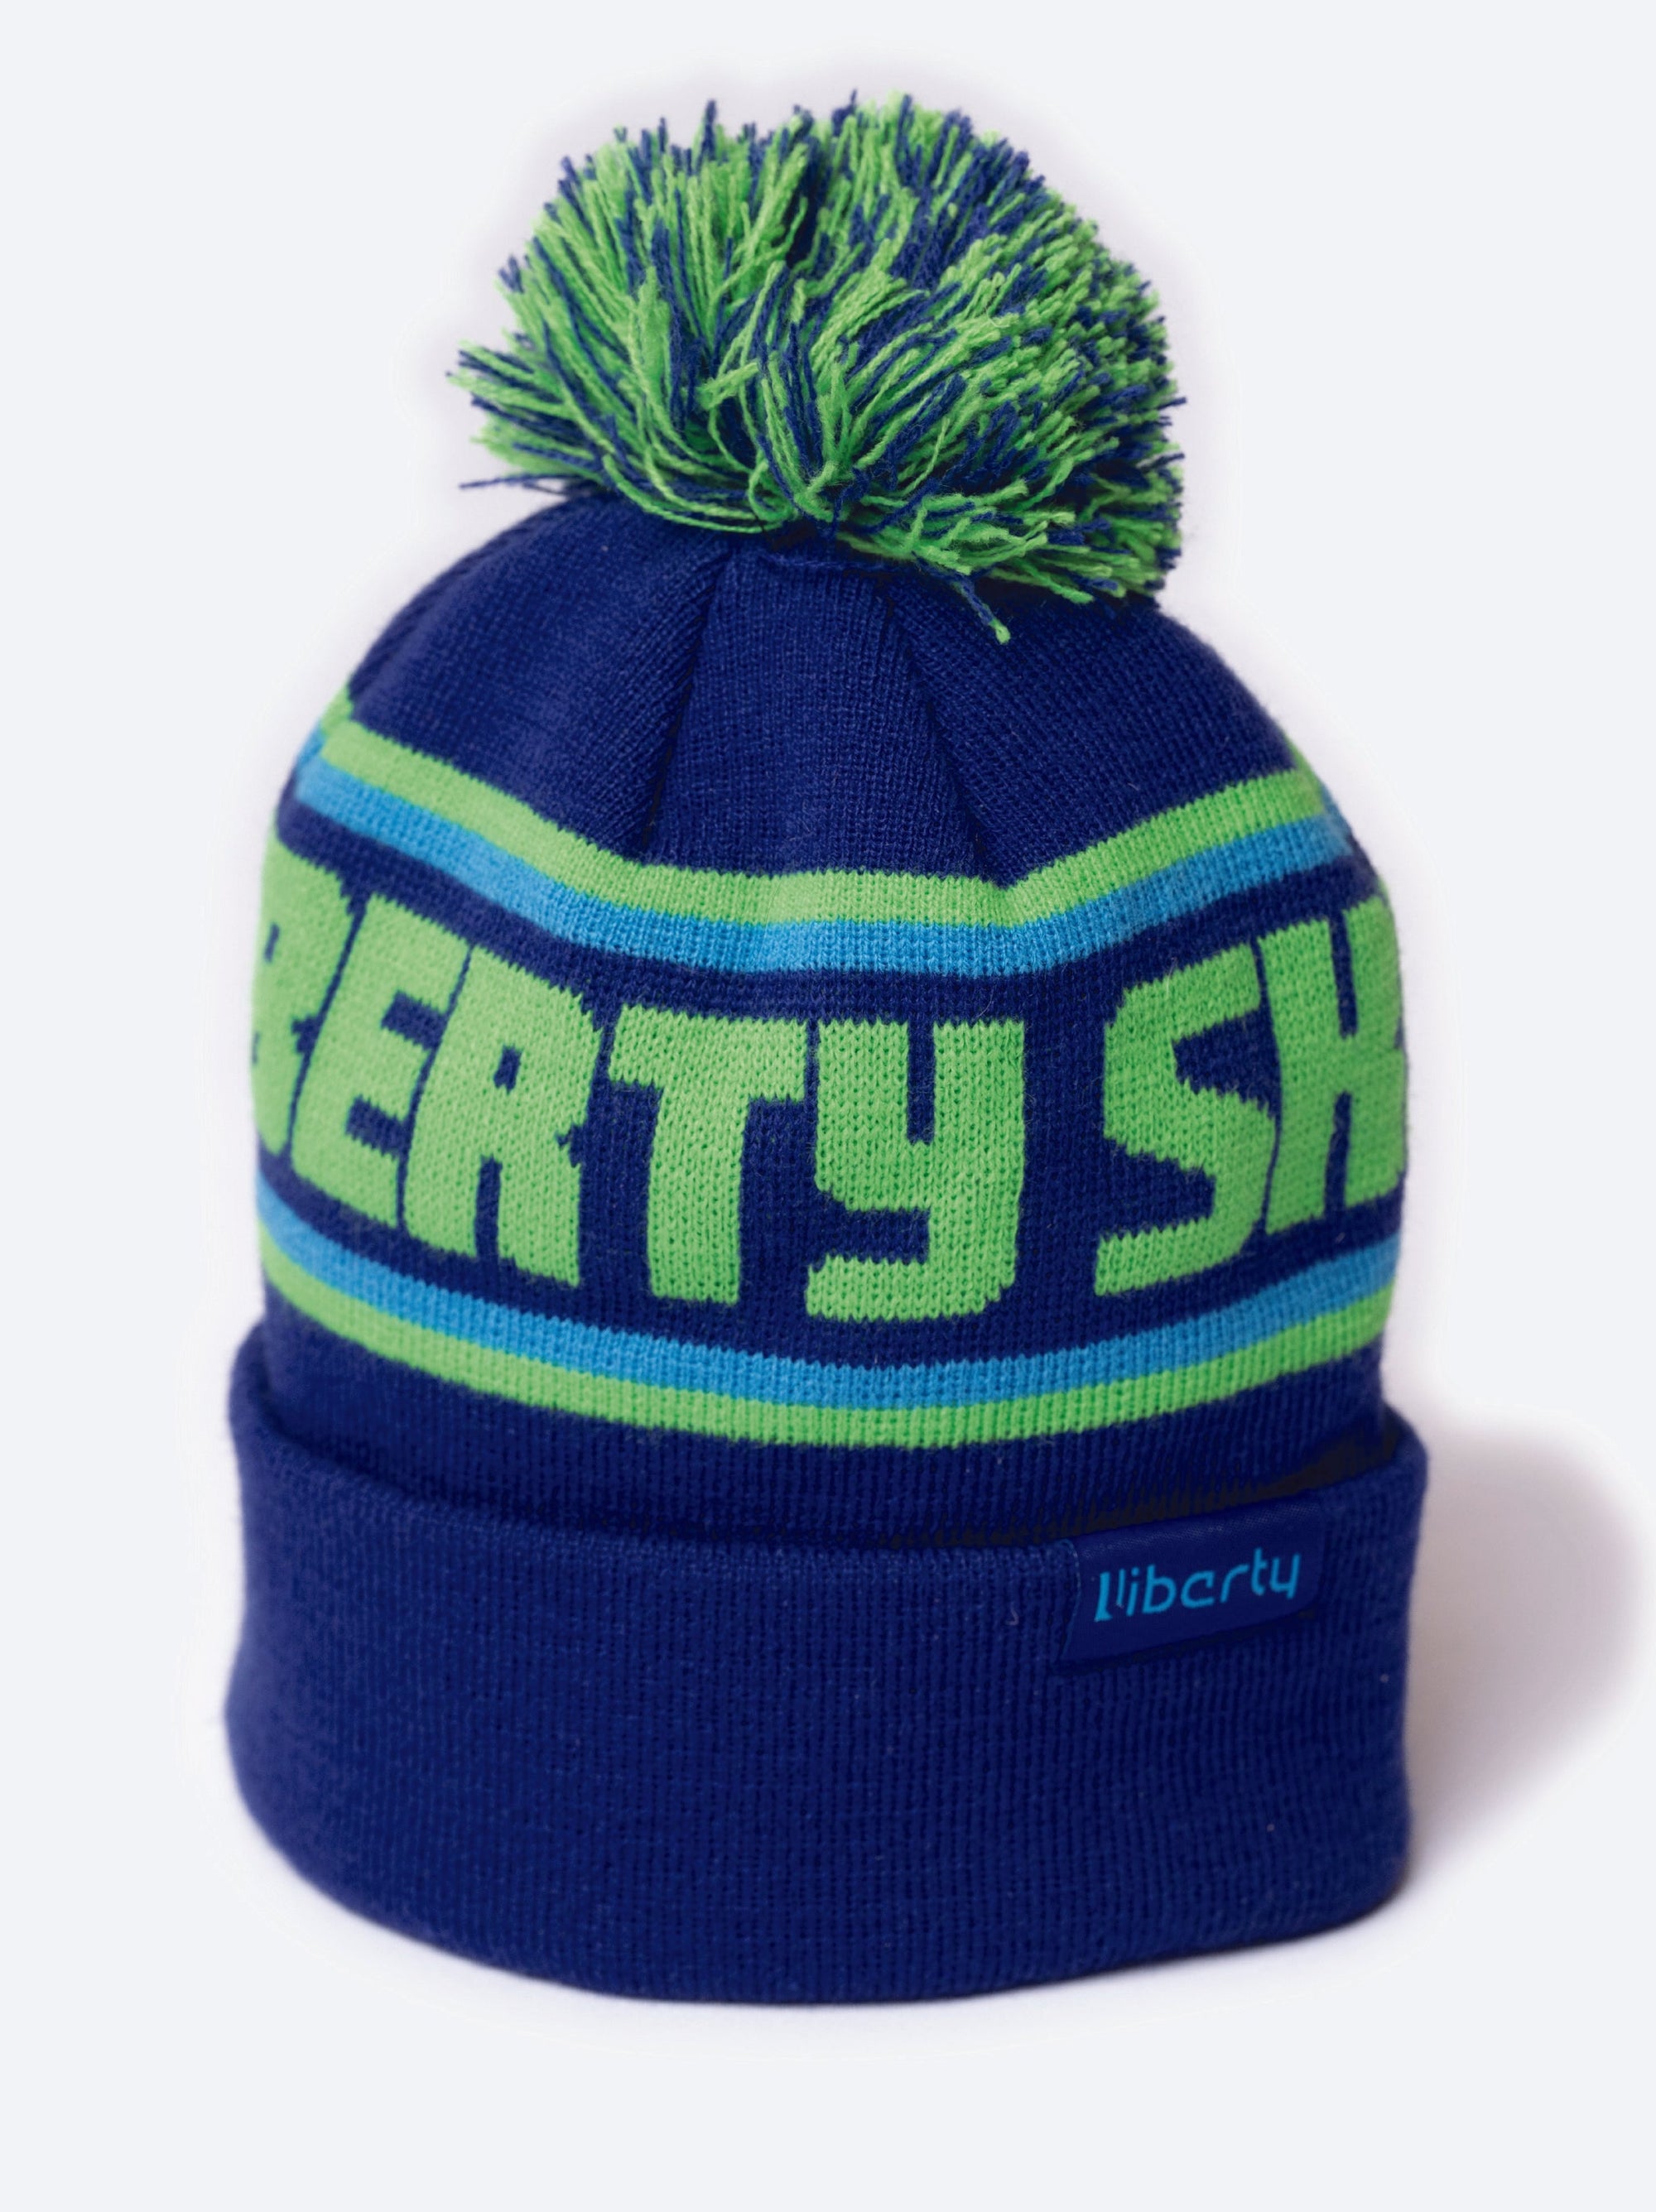 Liberty Skis Softgoods Blue/Green Pom Pom Hat Blue/Green